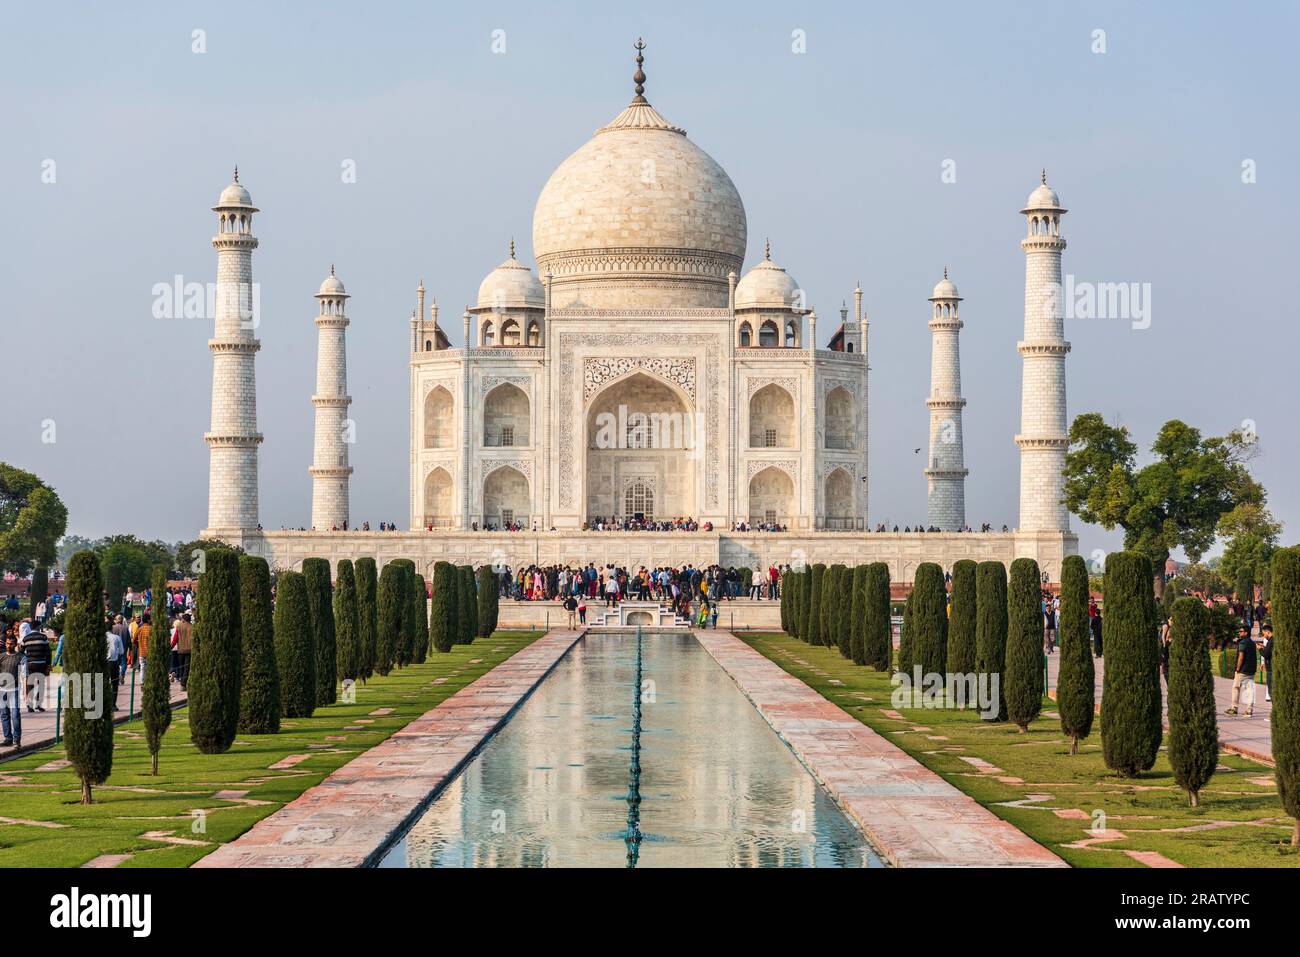 Taj Mahal, UNESCO World Heritage Site, in New Delhi, India. Stock Photo